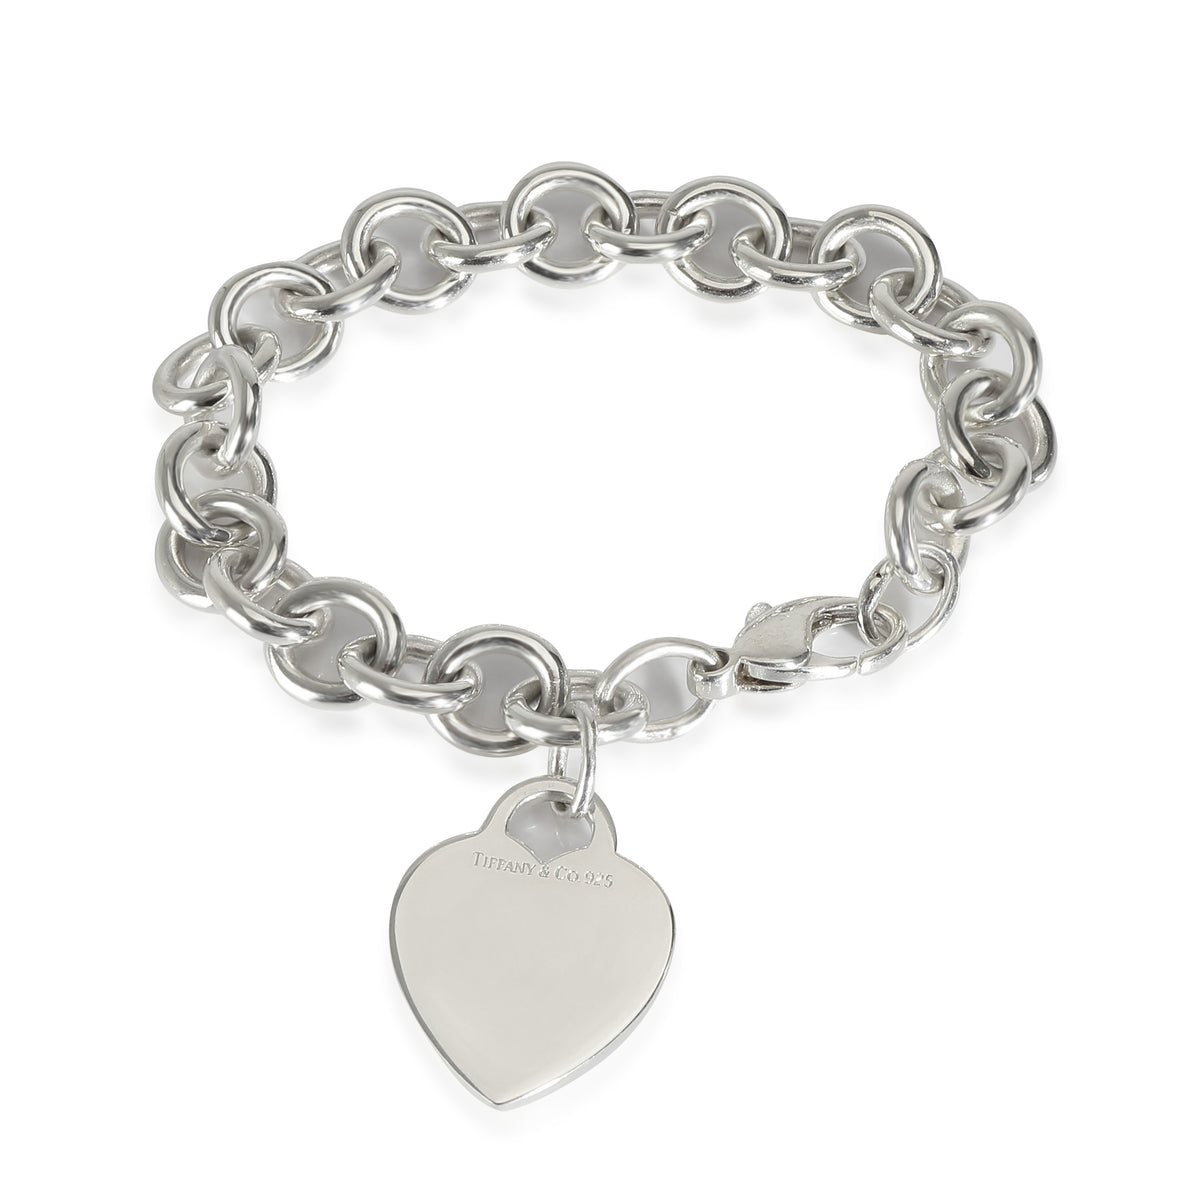 Tiffany & Co. Heart Tag Bracelet in  Sterling Silver